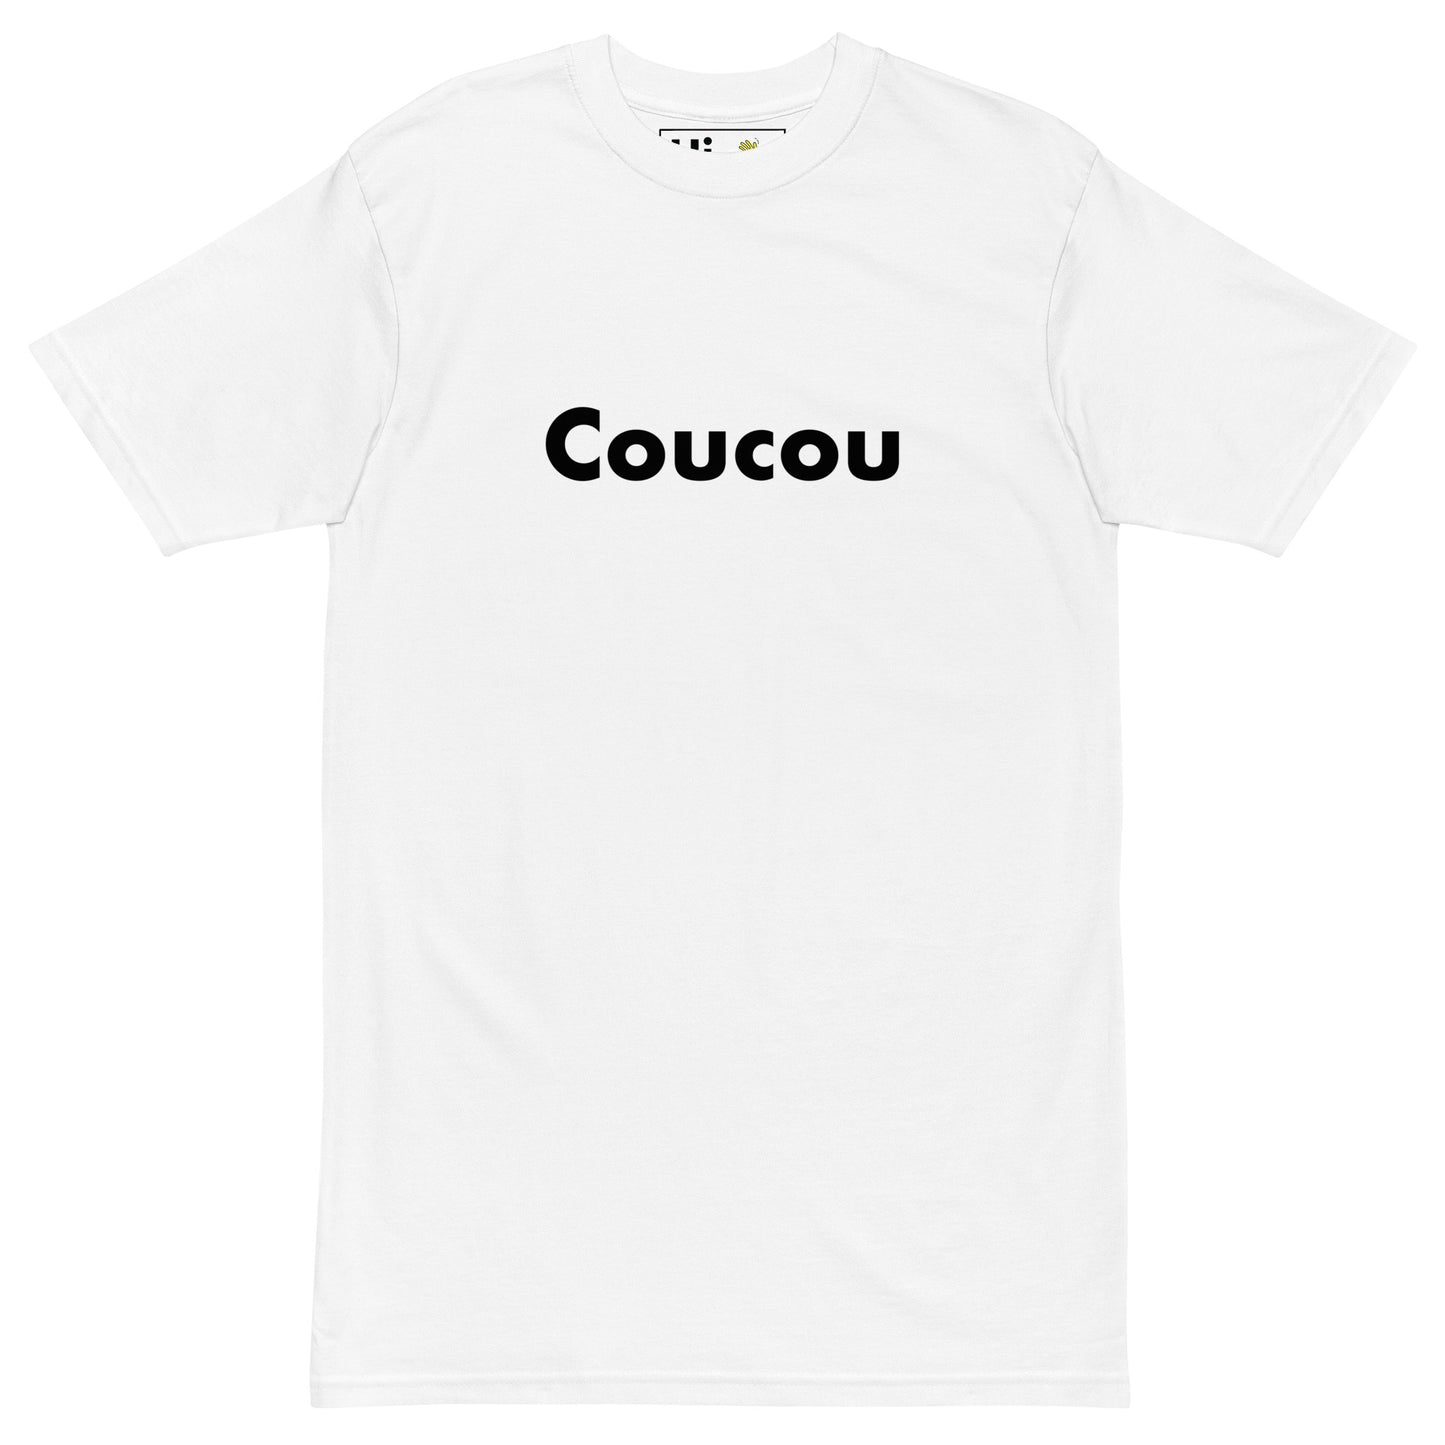 Hi Coucou French